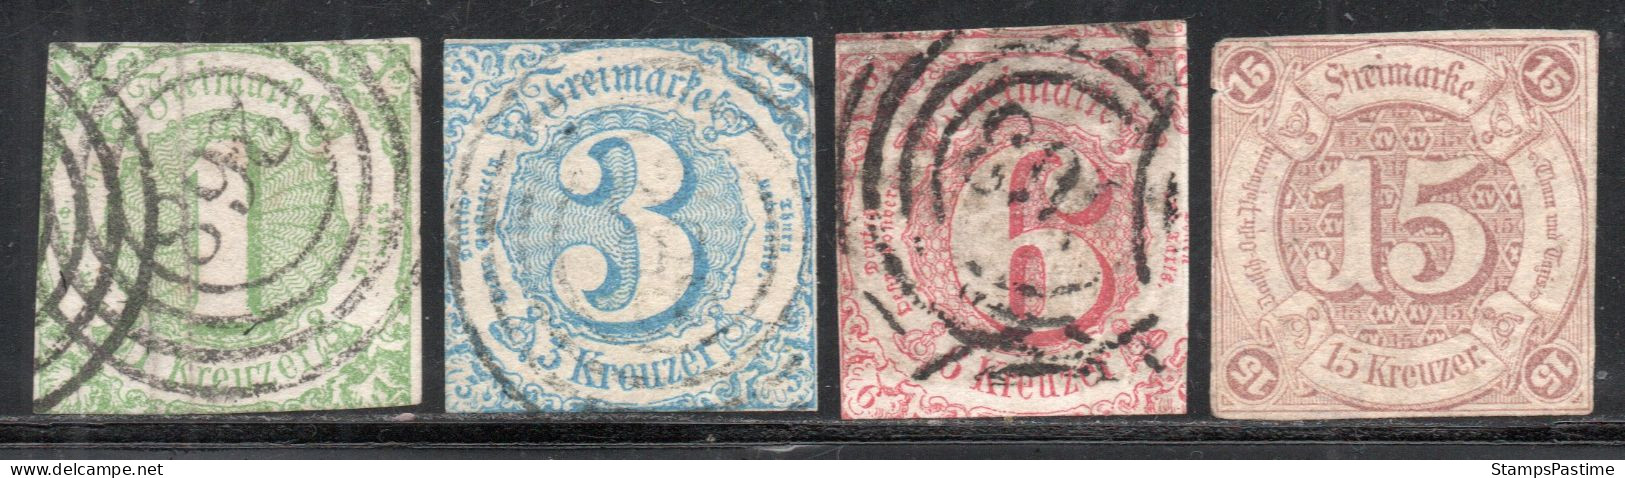 ALEMANIA – THURN Y TAXIS SUR Serie No Completa X 4 Sellos Usados CIFRAS Año 1859 – Valorizada En Catálogo € 104,25 - Usados